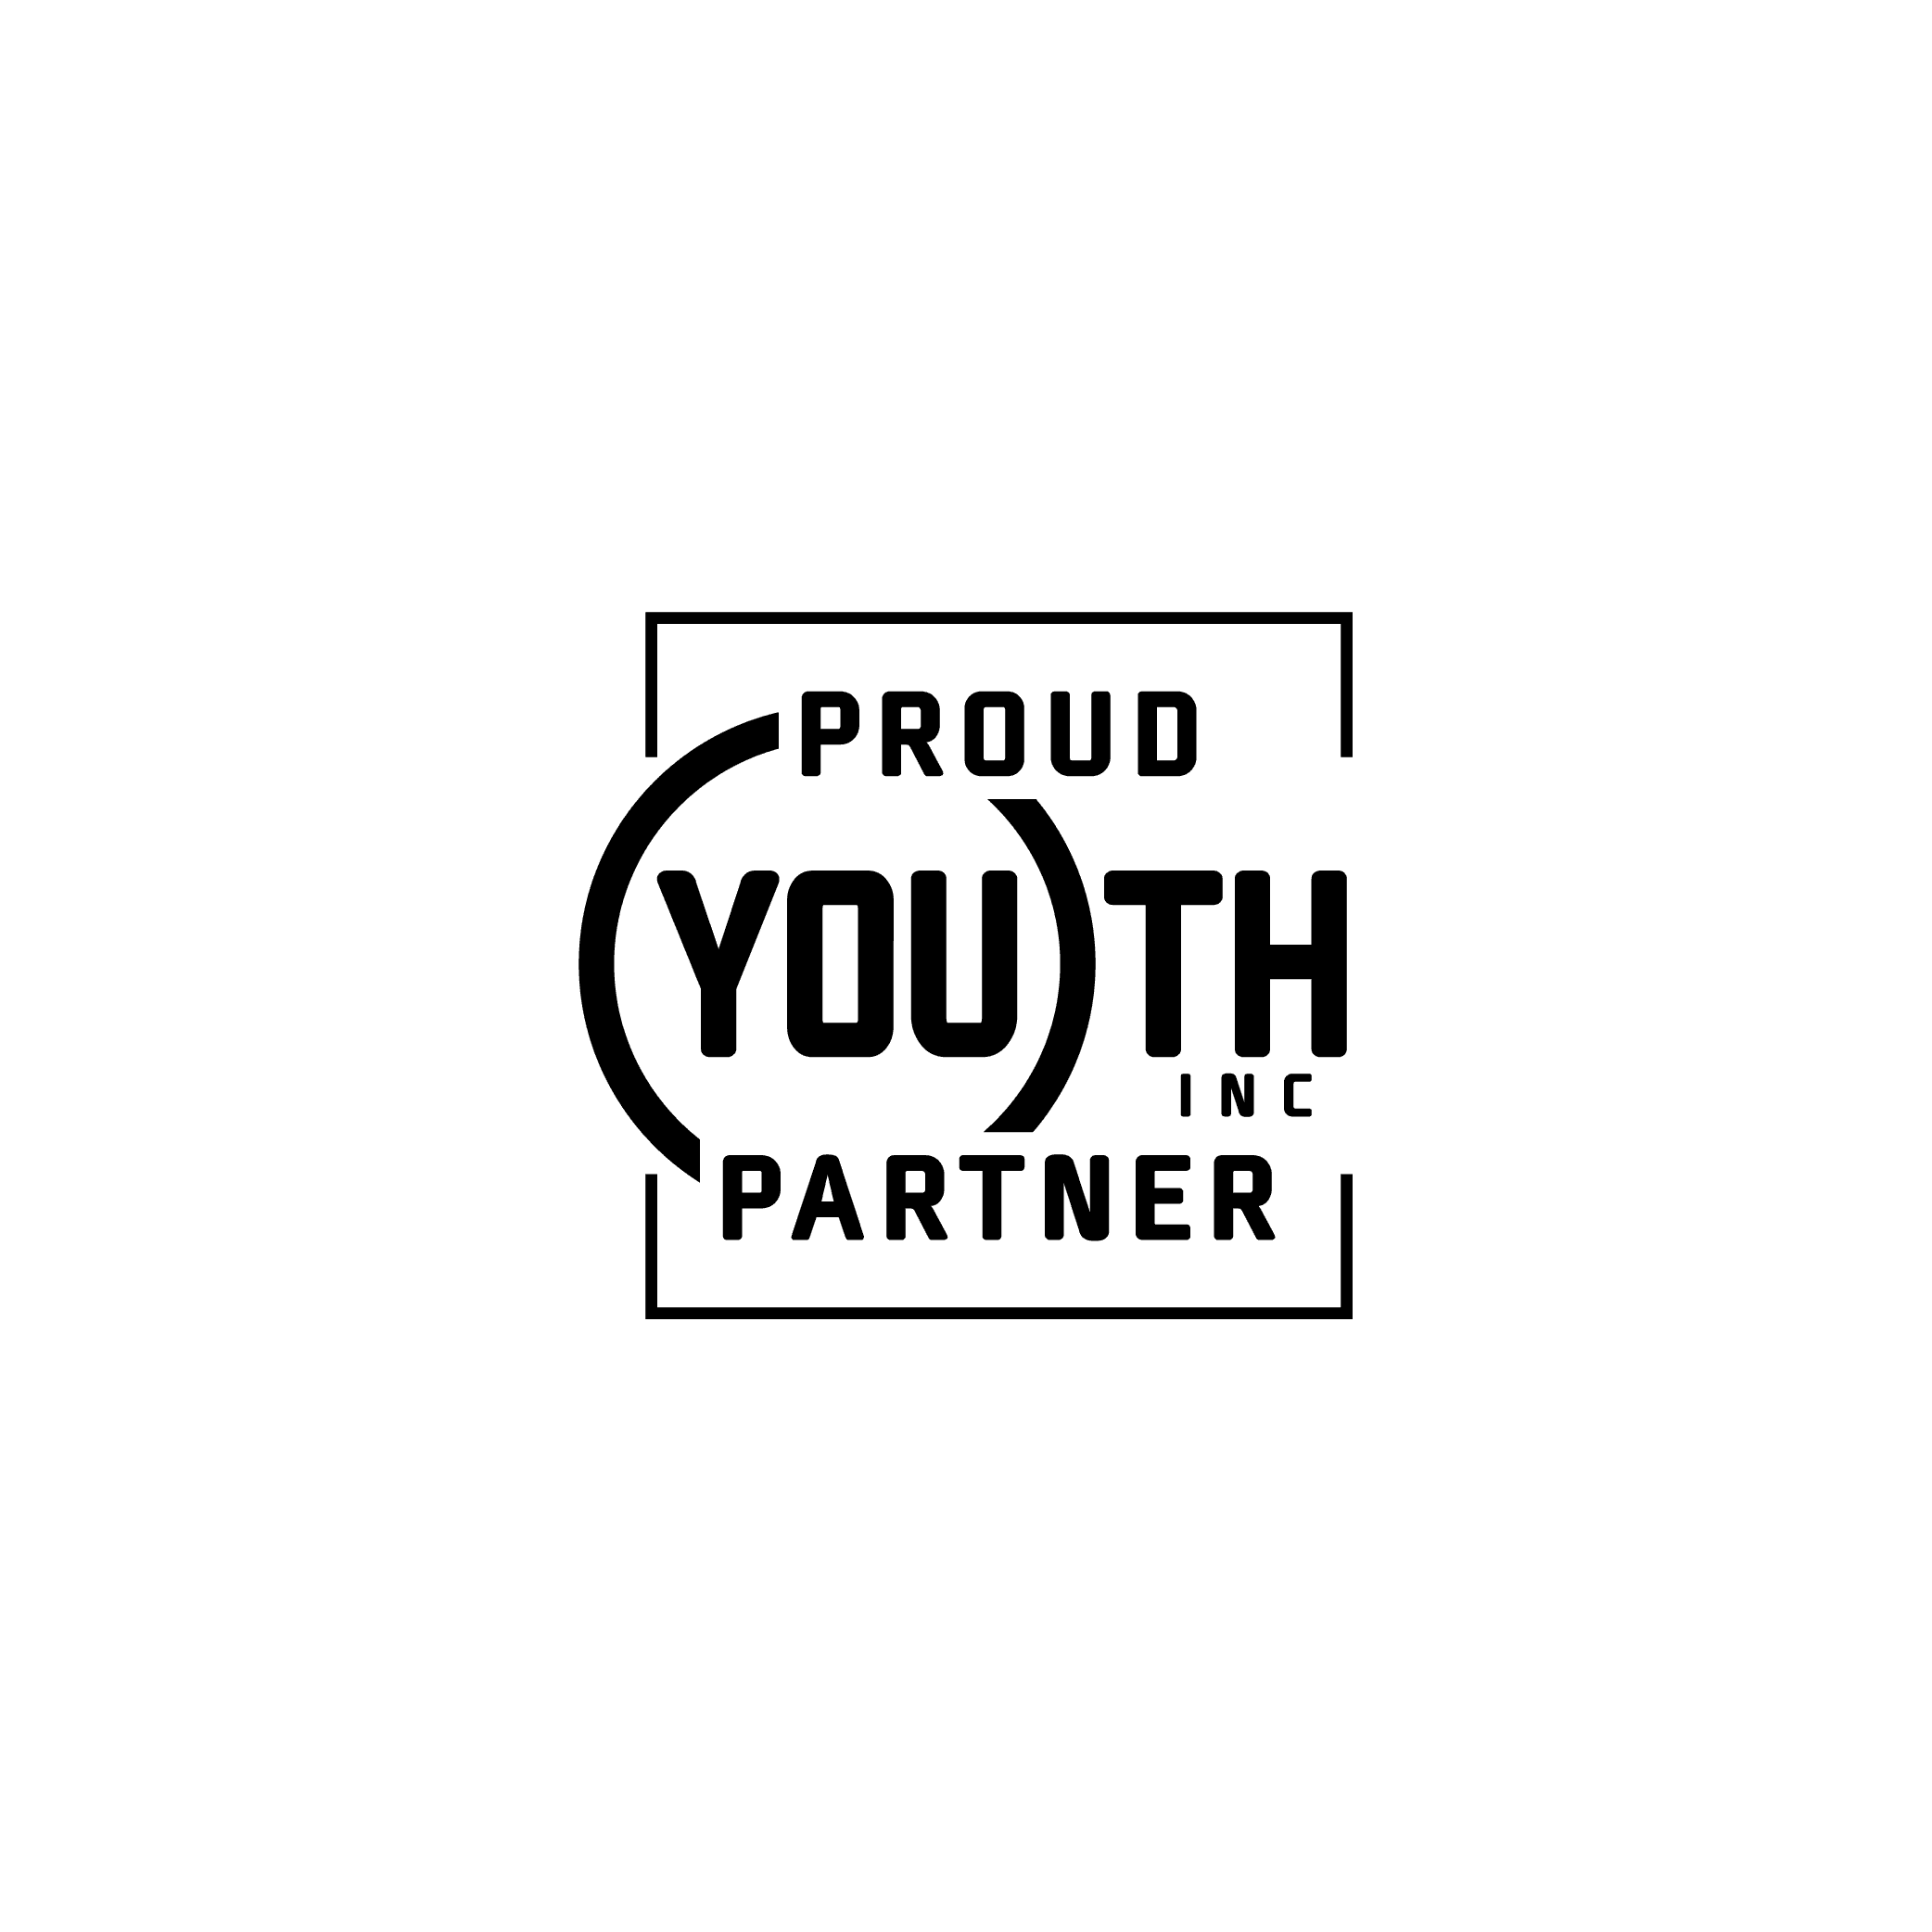 Youth Inc. Partner